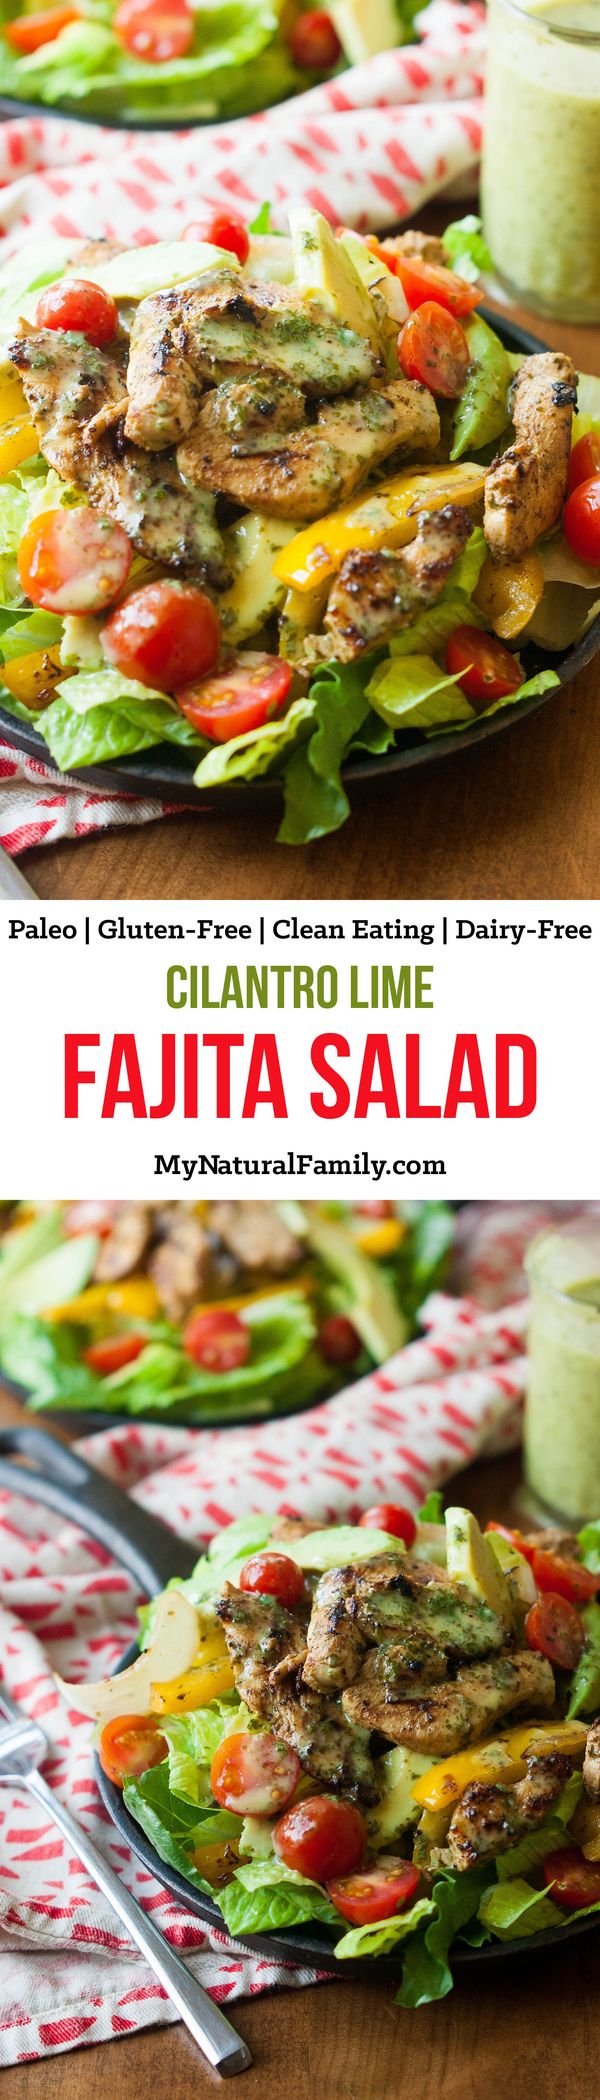 Sizzling Cilantro Lime Fajita Salad with Honey Lime Vinaigrette